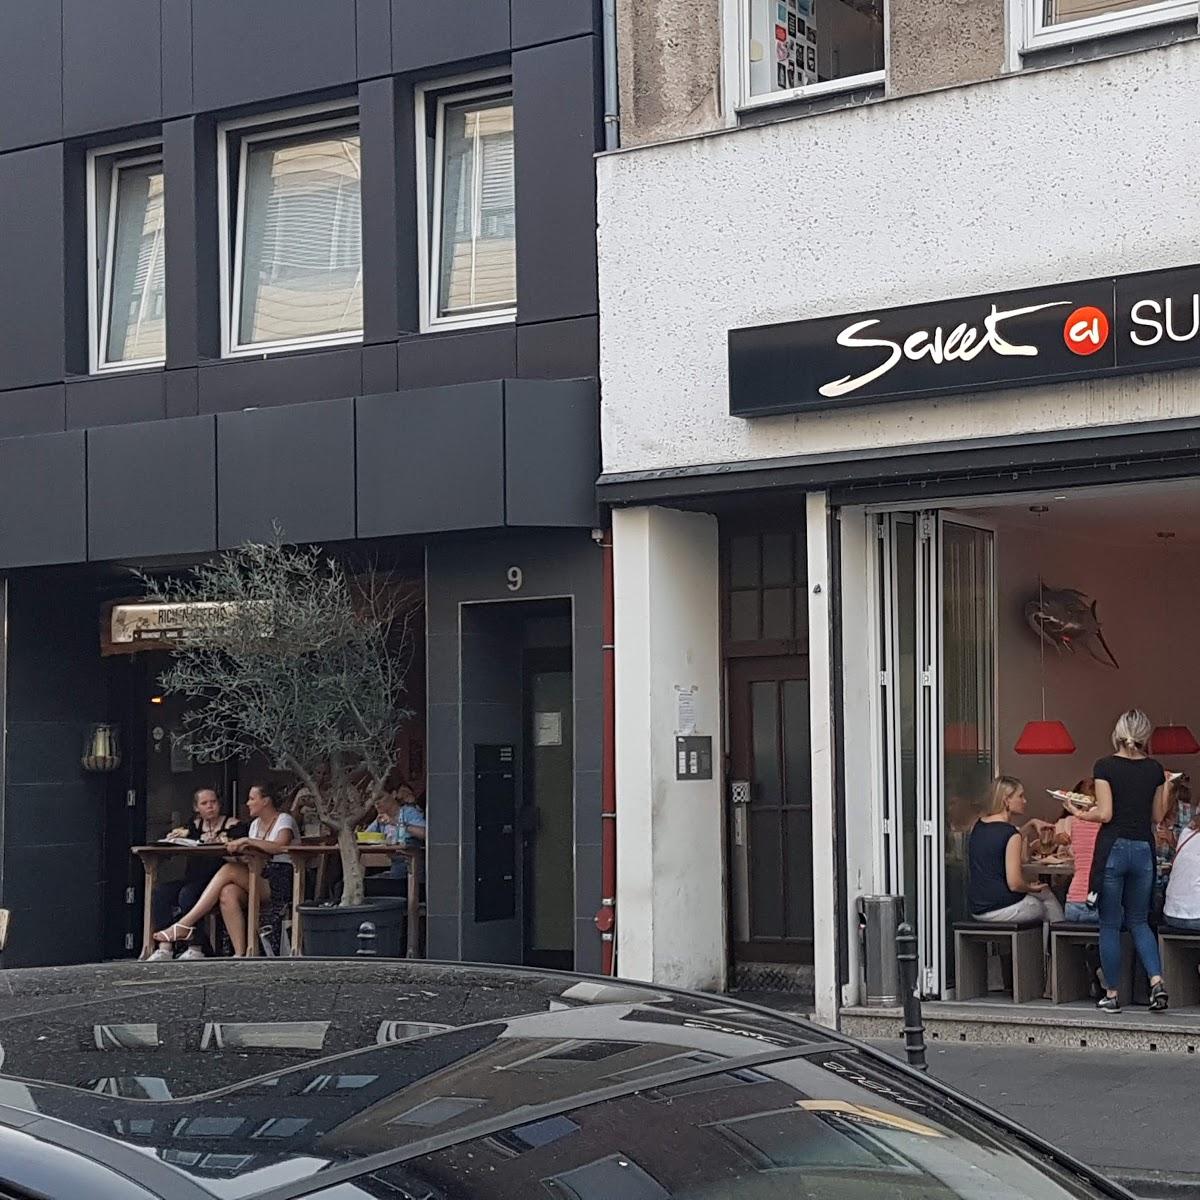 Restaurant "Sweet Sushi" in Köln